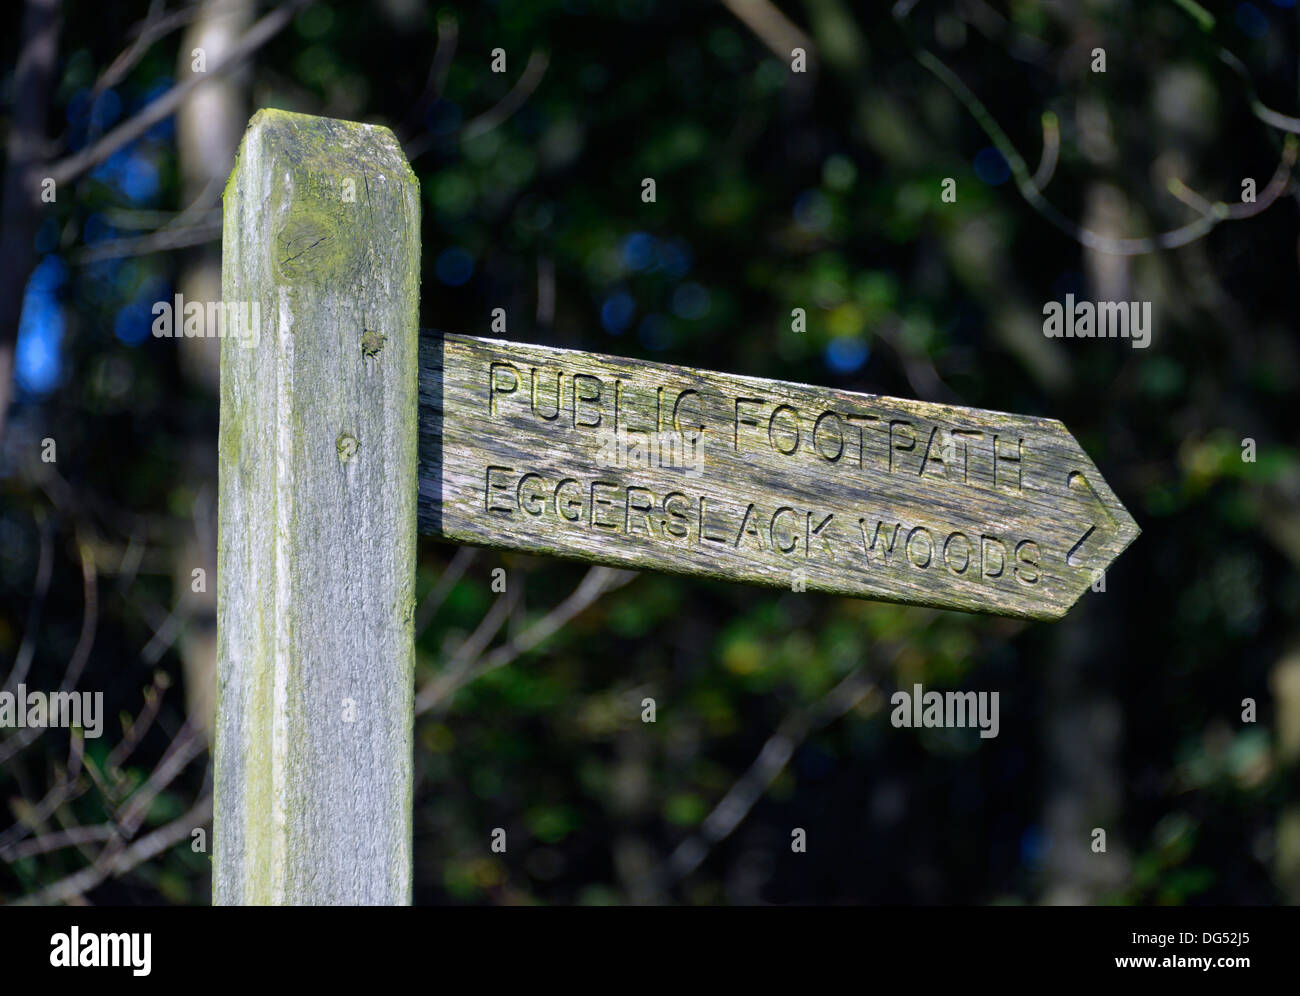 Public Footpath fingerpost. Eggerslack Woods, Grange-over-Sands, Cumbria, England, United Kingdom, Europe. Stock Photo